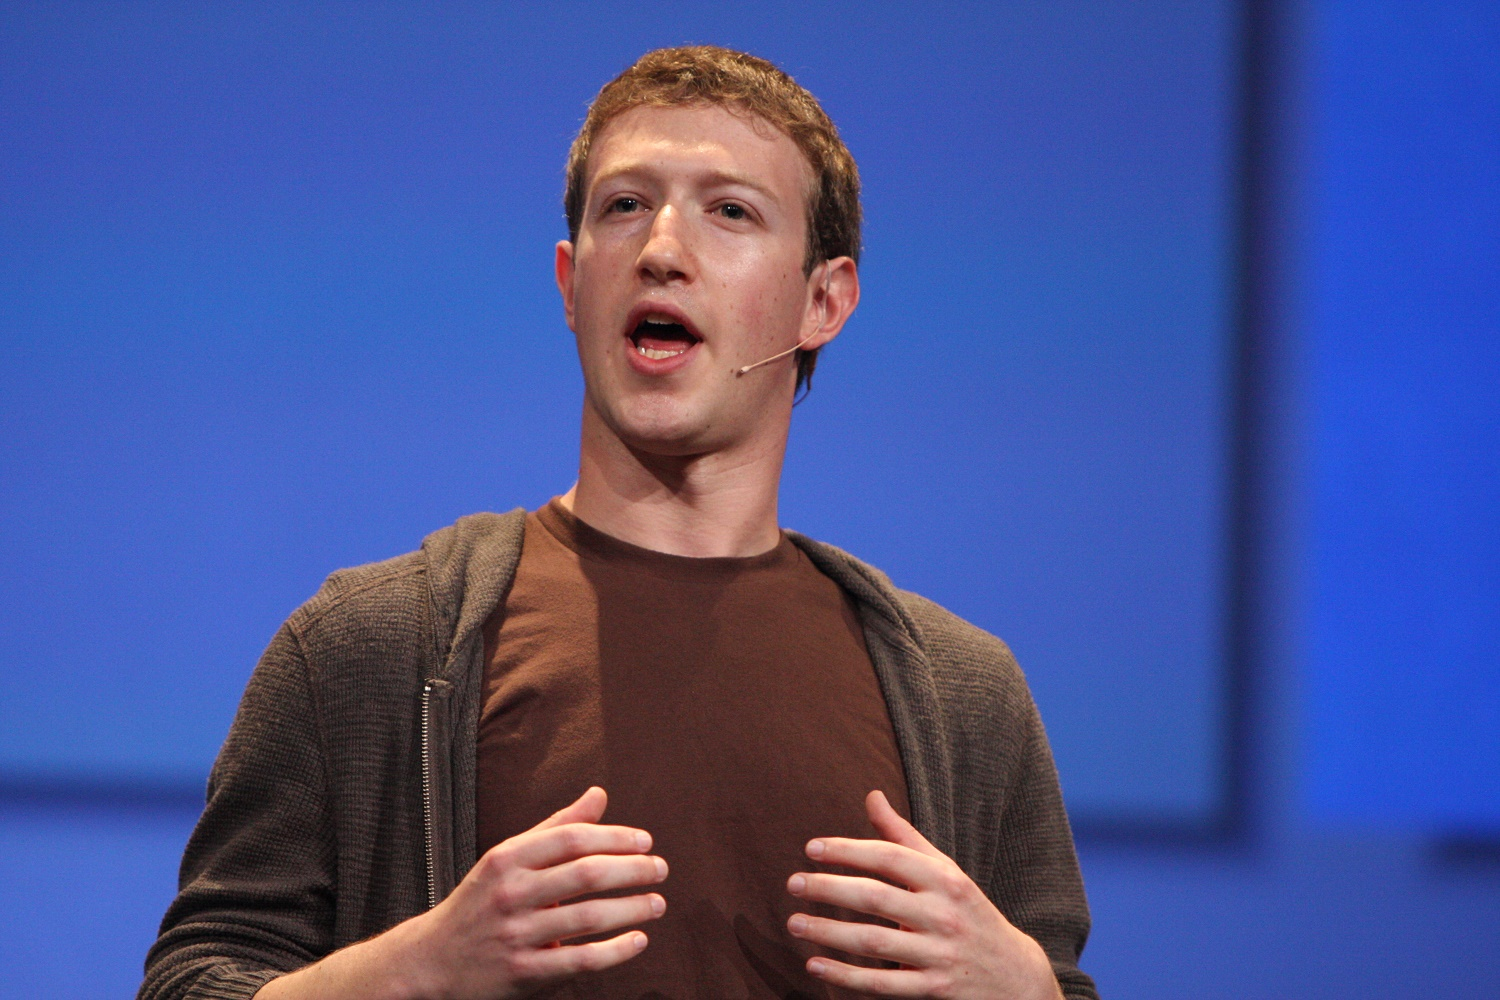 Mark Zuckerberg defends Facebook against Trump's claims of bias